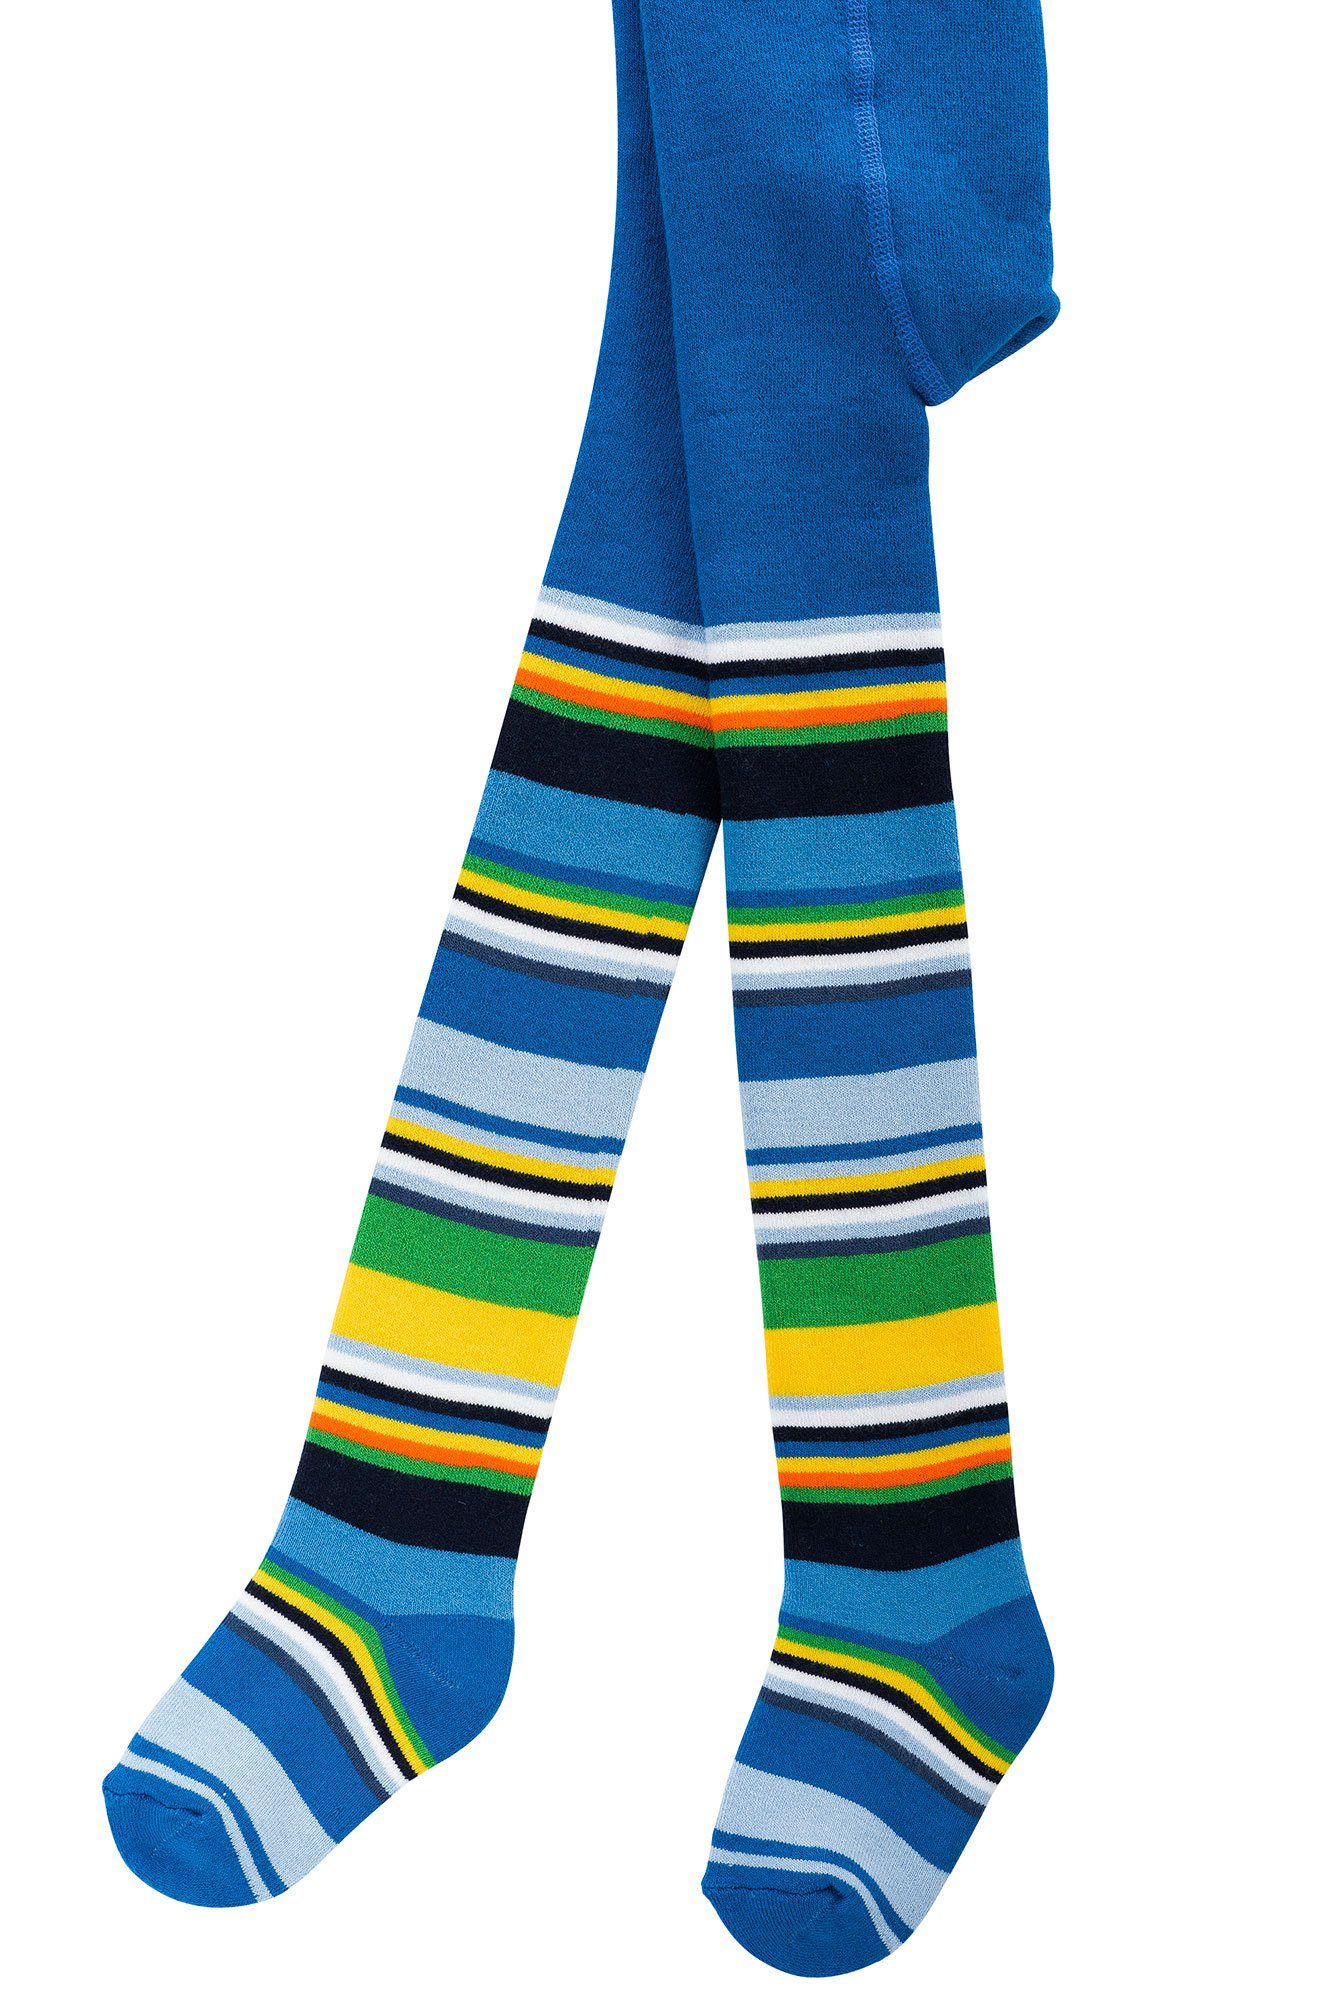 Socks 4 Fun Thermostrumpfhose Socks 5768 Kinder-Thermostrumpfhose 1 Fun Stück (1 150 Stück) St. 4 DEN 1 grün